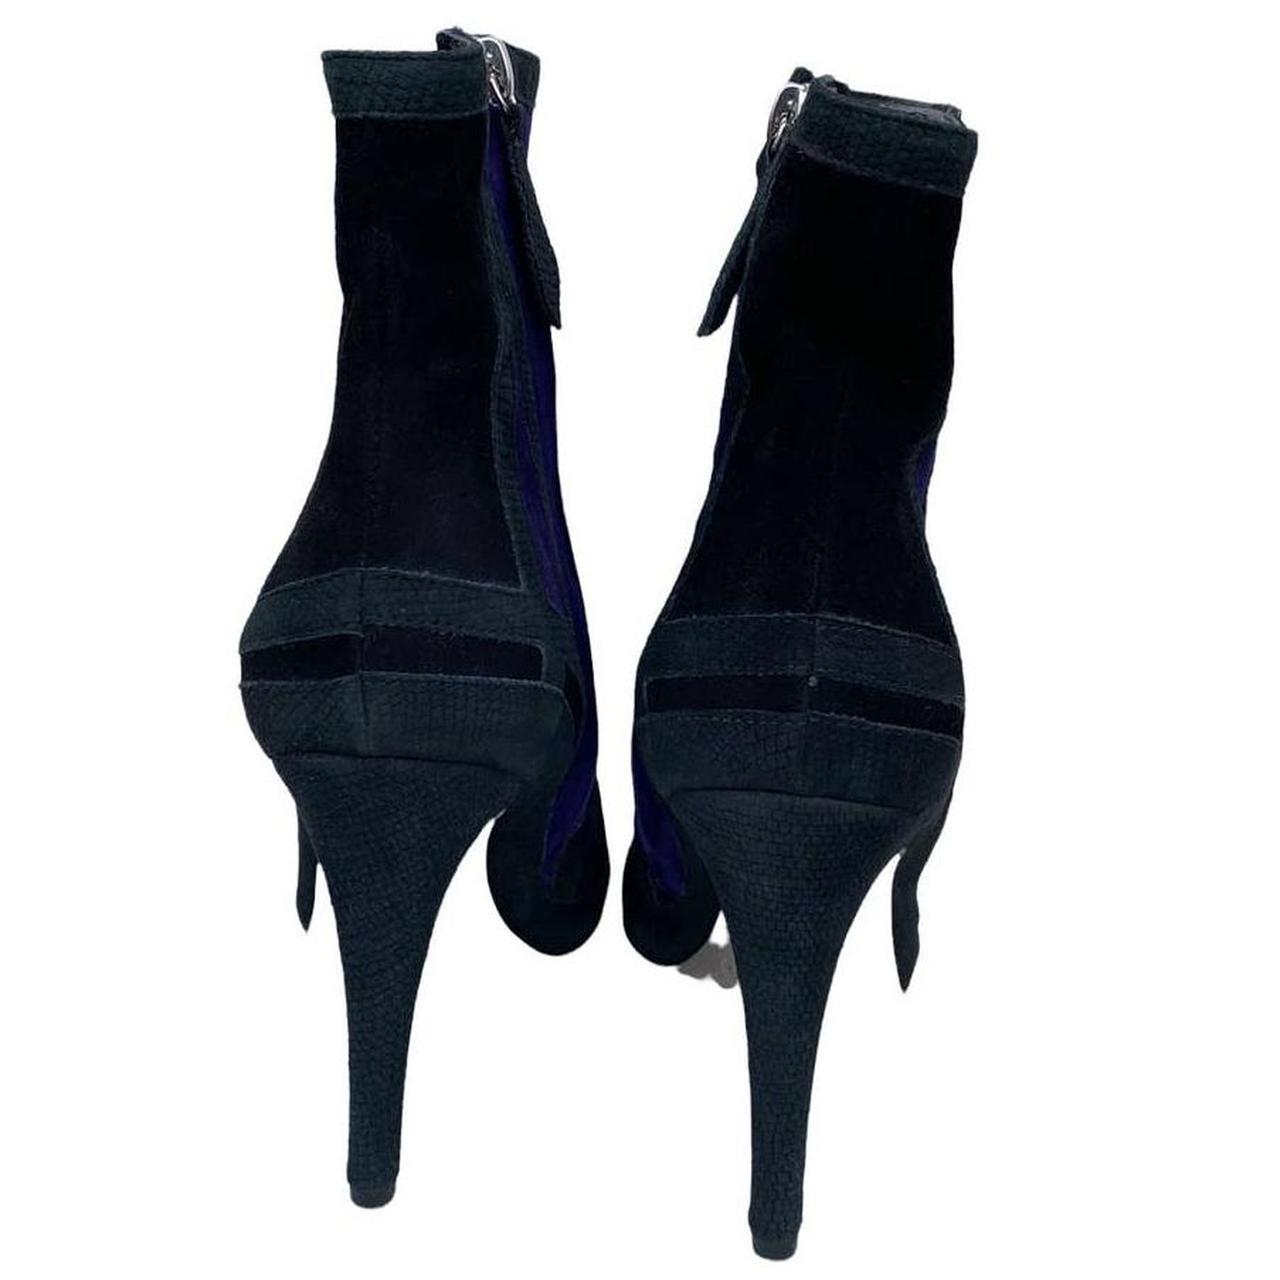 Aperlai Women's Black and Purple Boots (4)